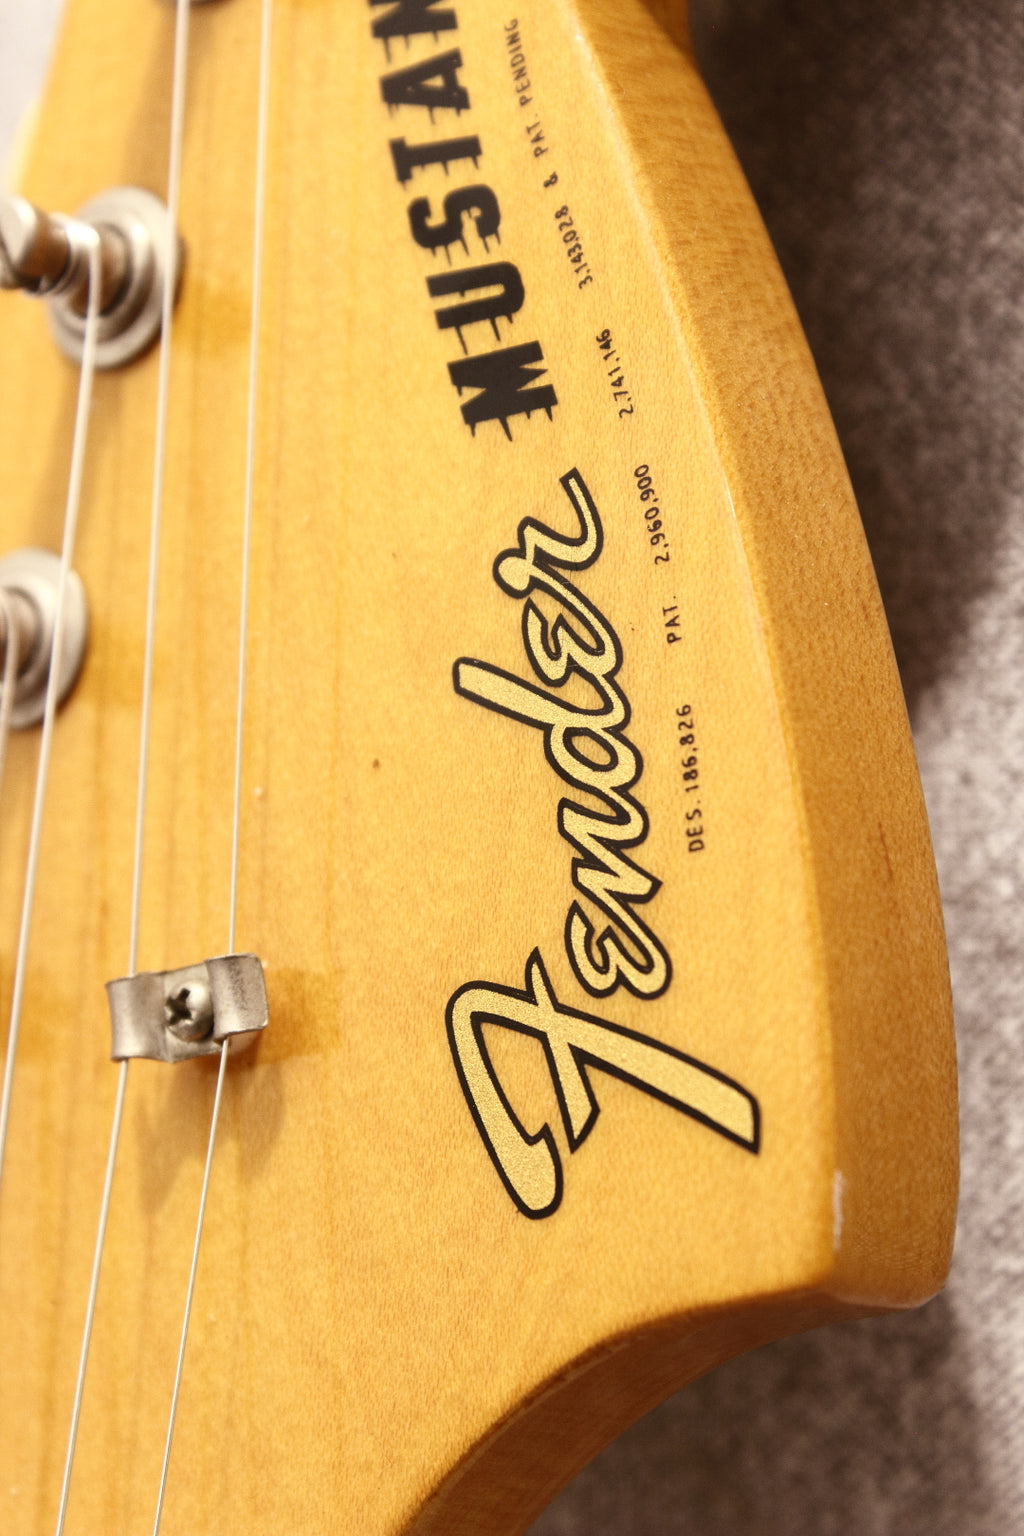 Fender Japan '65 Mustang MG65/VSP Vintage White 2008